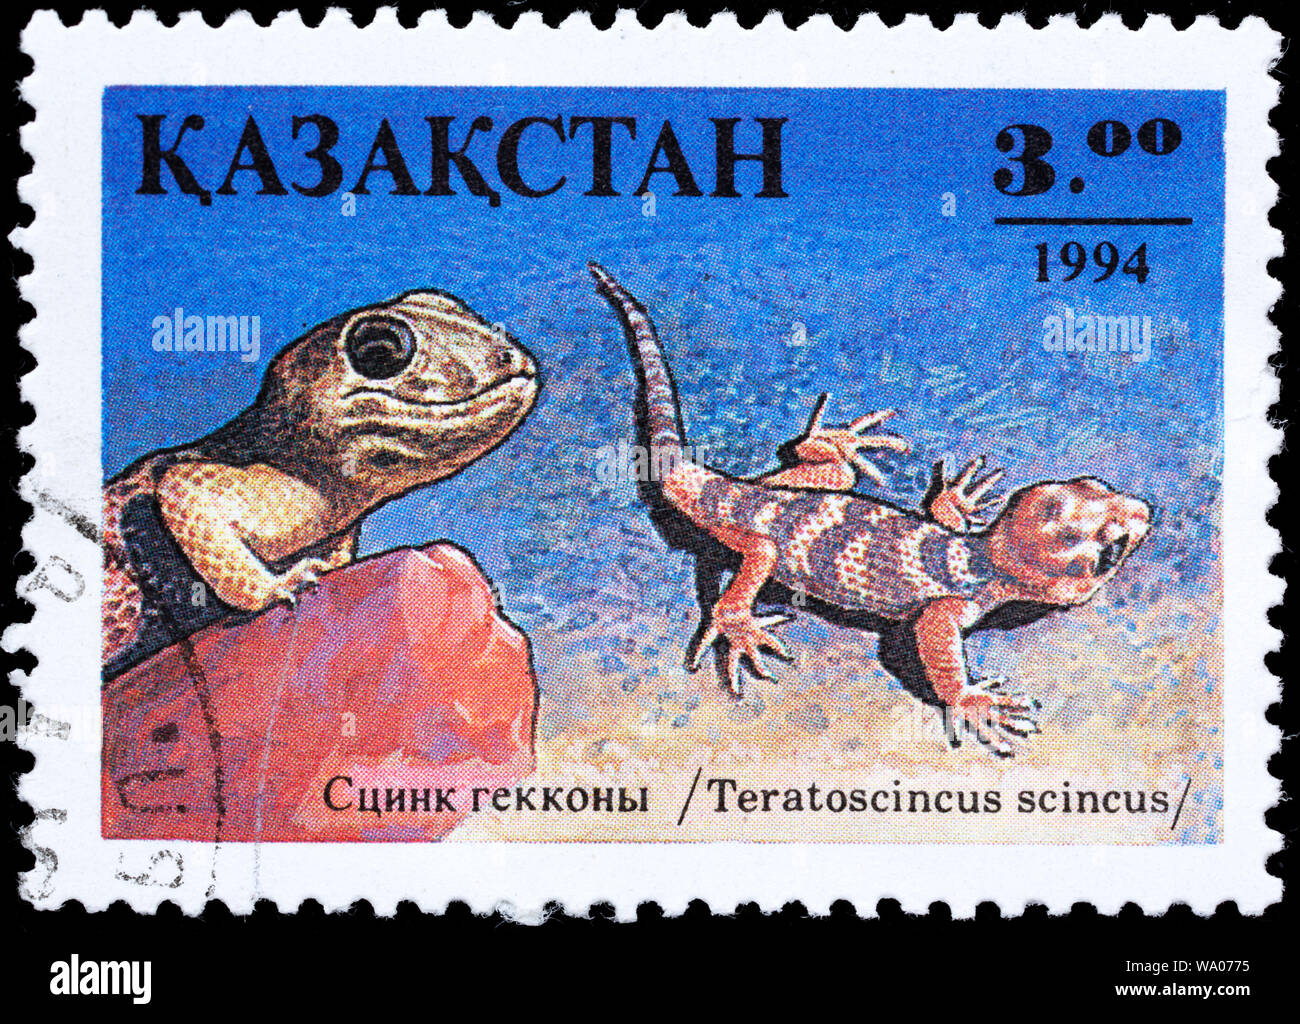 Giant frog eye gecko, Teratoscincus scincus, postage stamp, Kazakhstan, 1994 Stock Photo